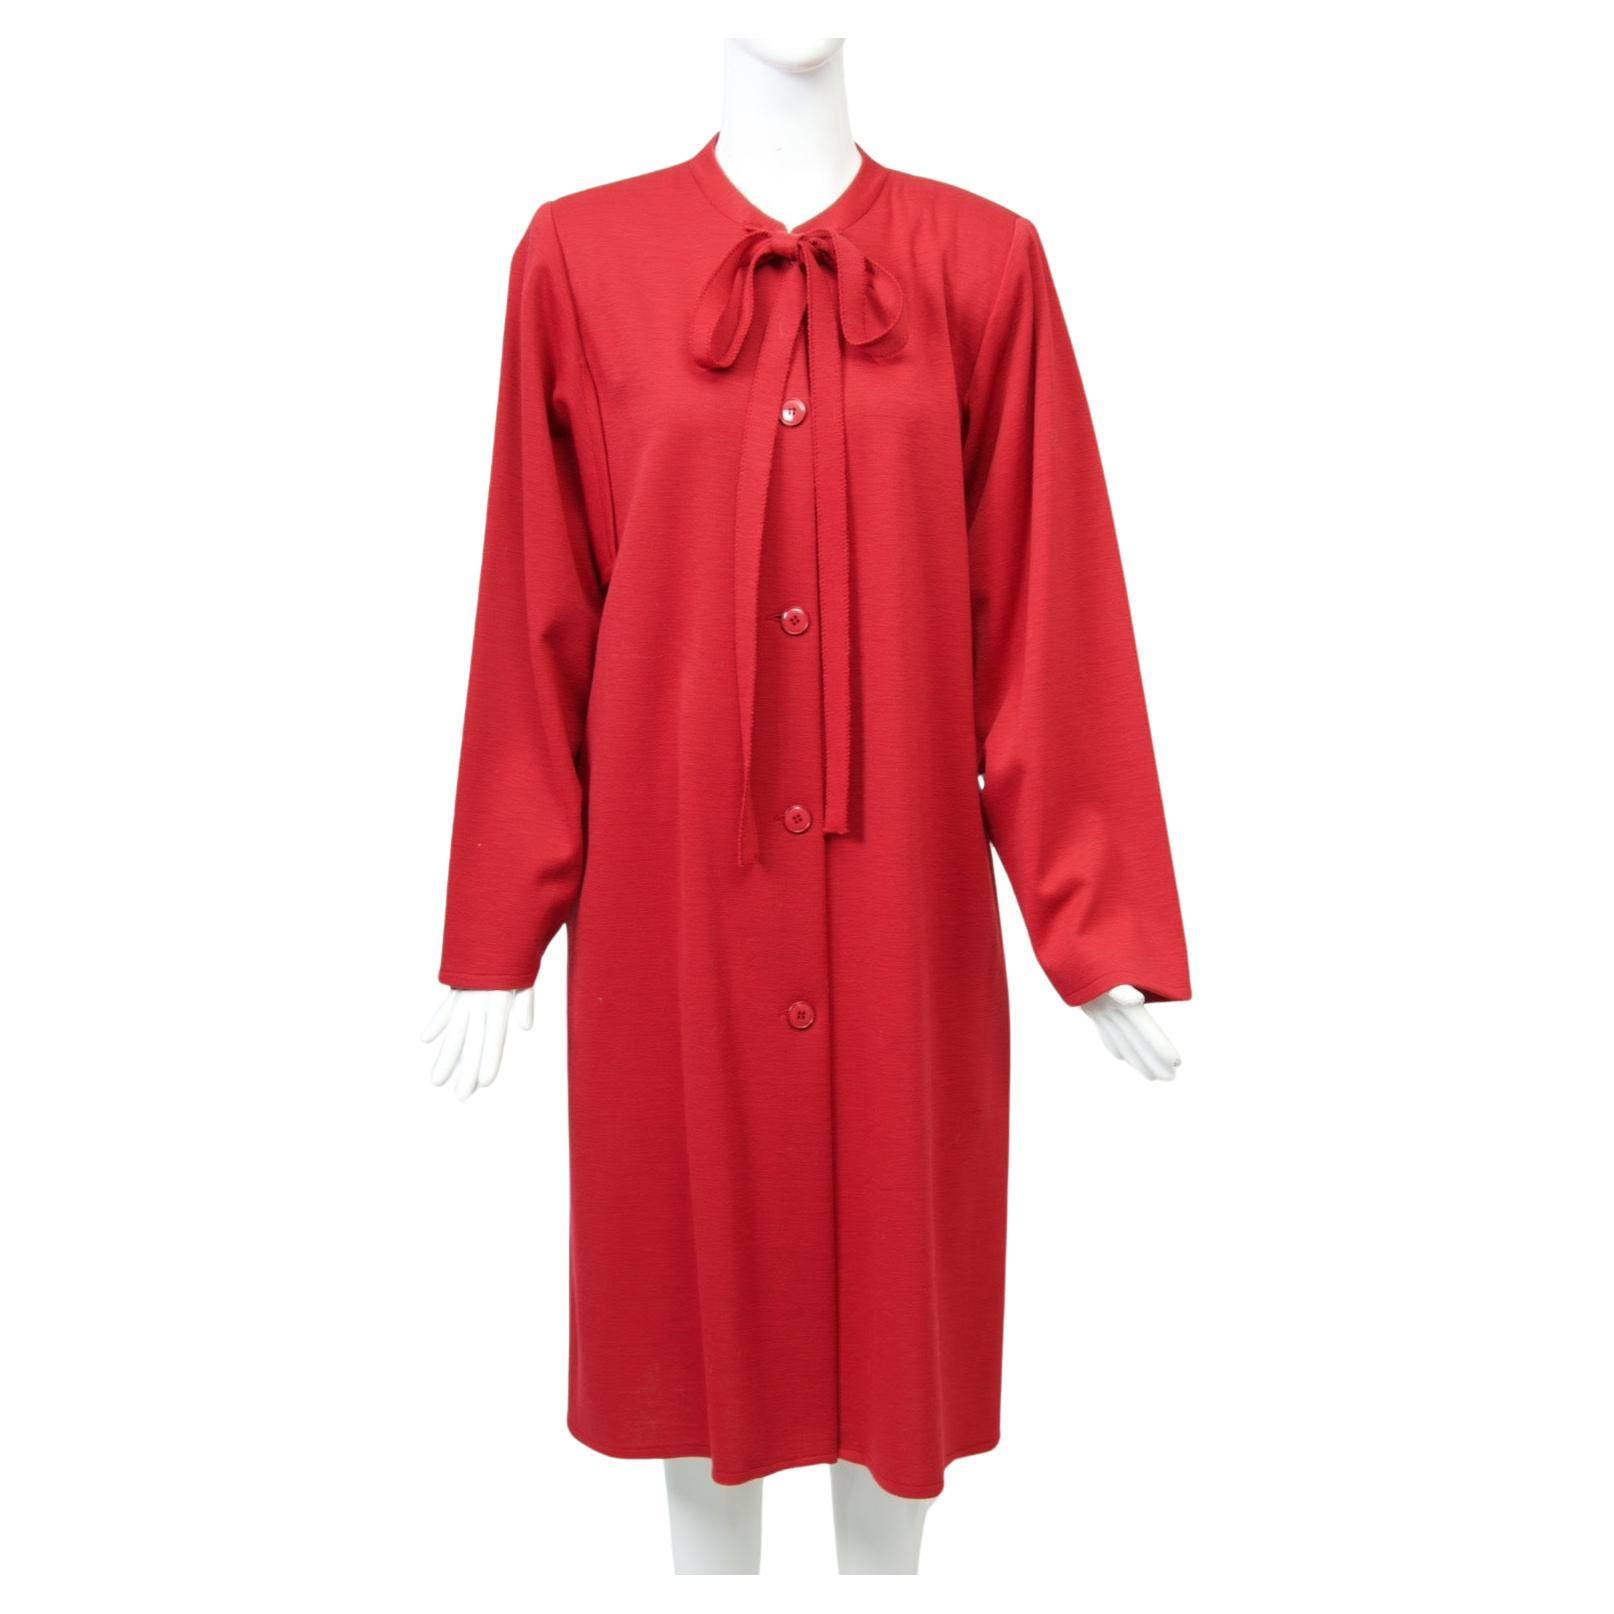 Sonia Rykiel Red Knit Coat/Dress